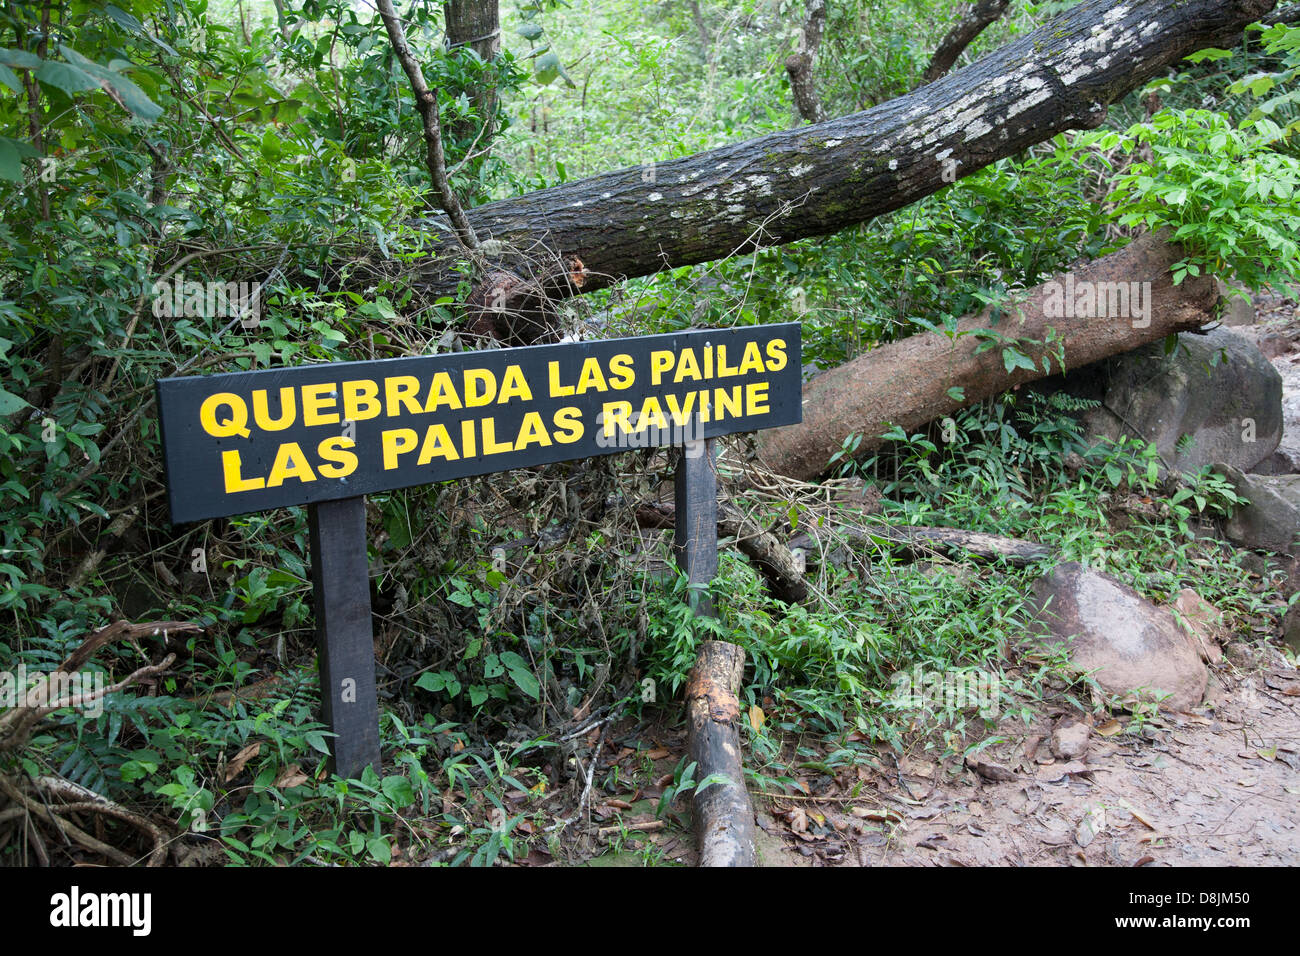 Quebrada Las Pailas, Las Pailas Ravine Sign, Rincon de la Vieja National Park, Costa Rica Stock Photo